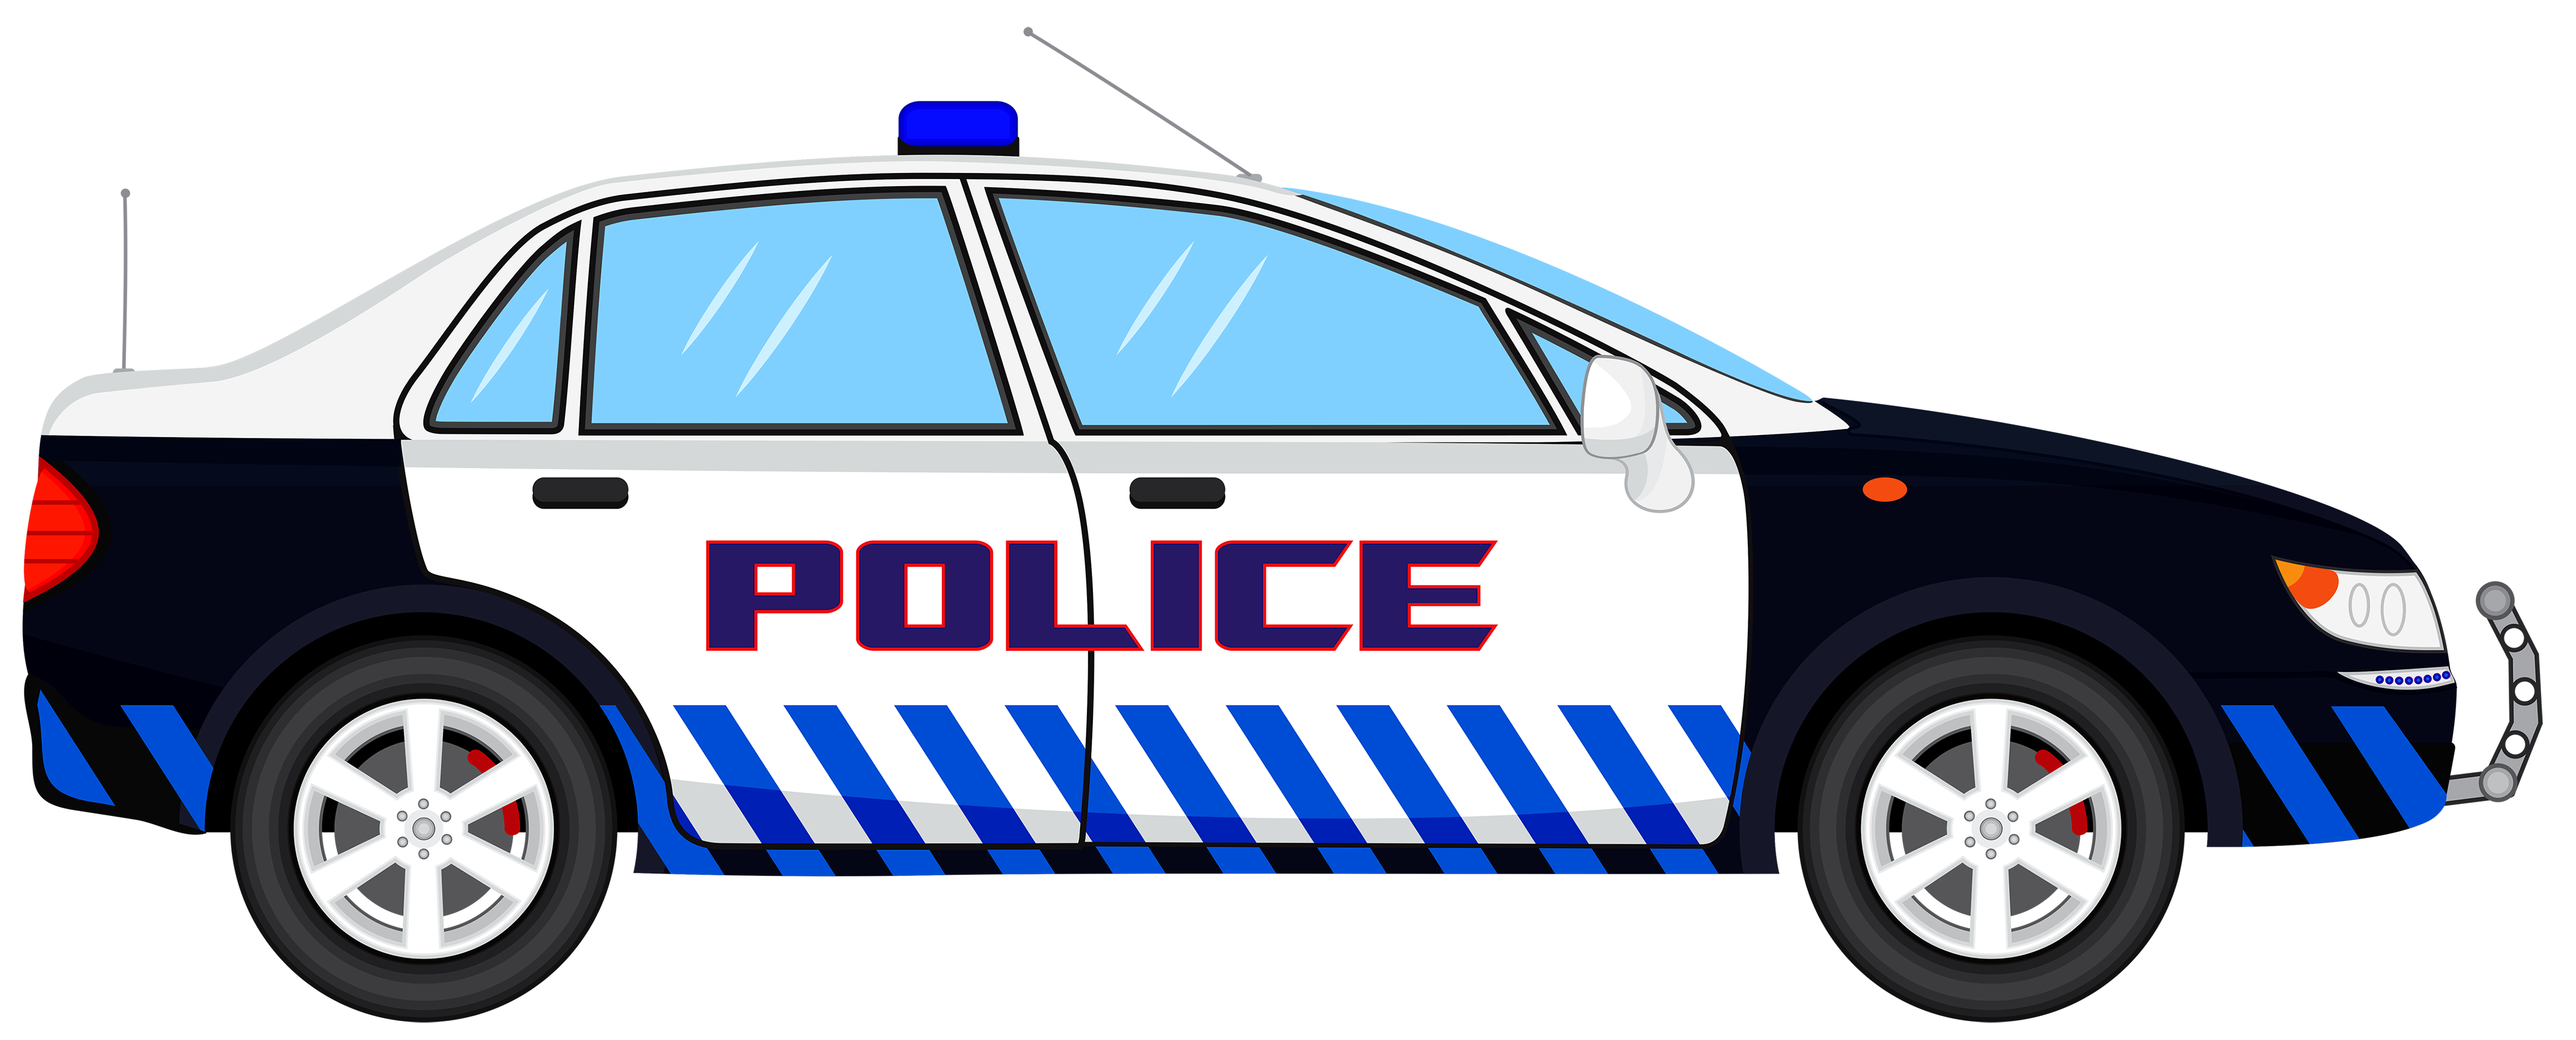 Police car transparent clip art image